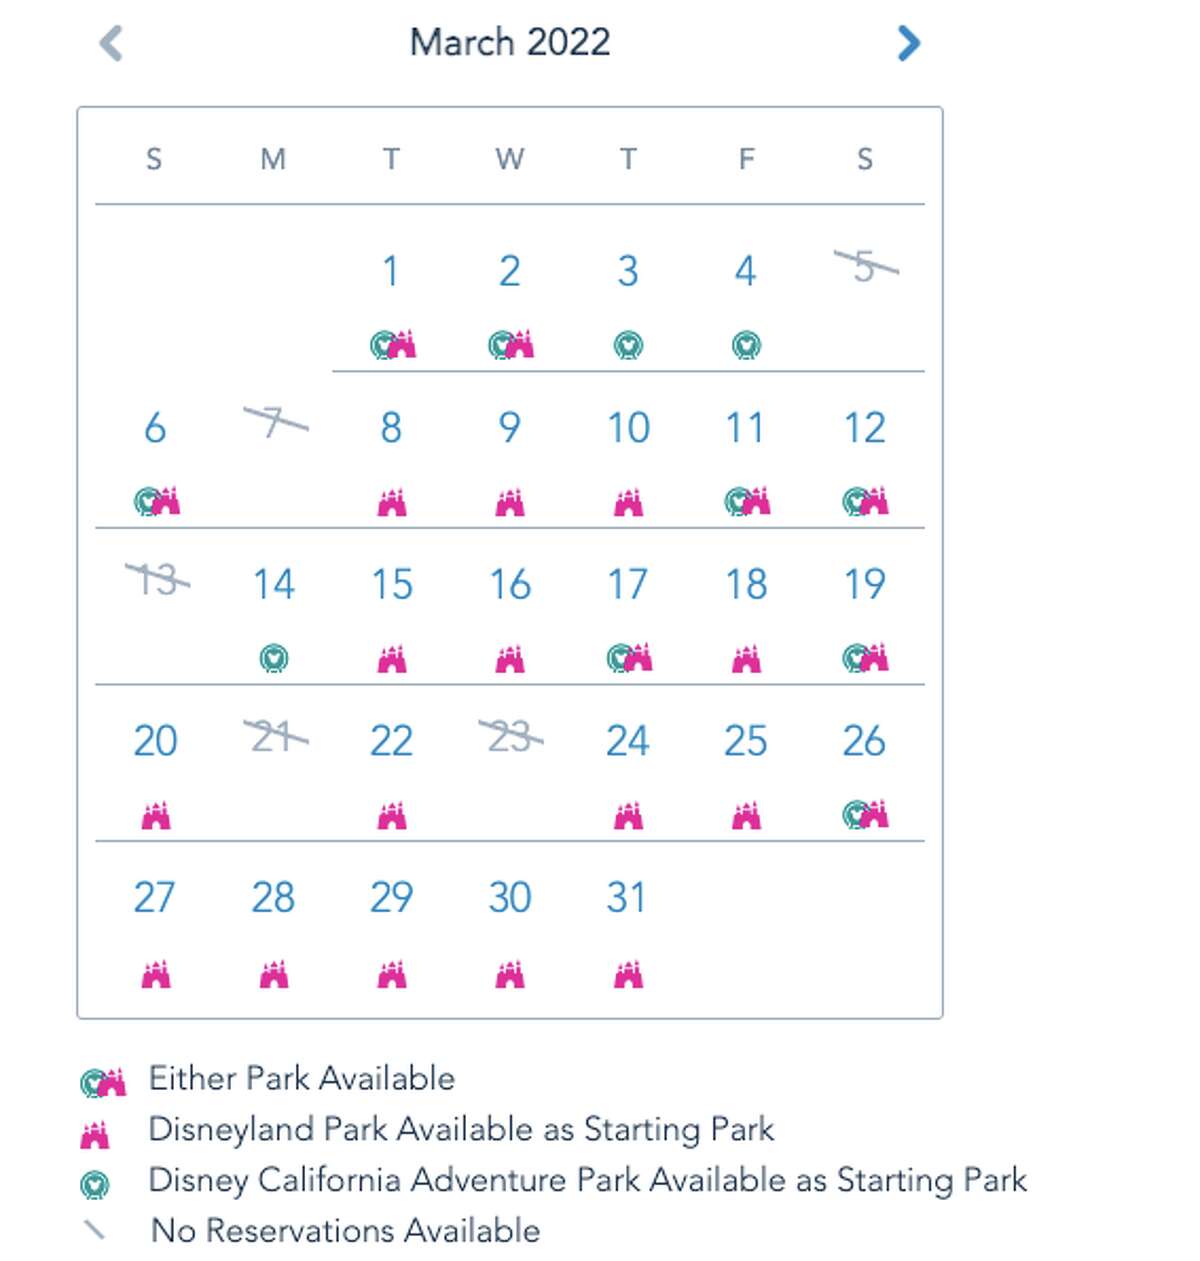 Disneyland calendar for March 2022.